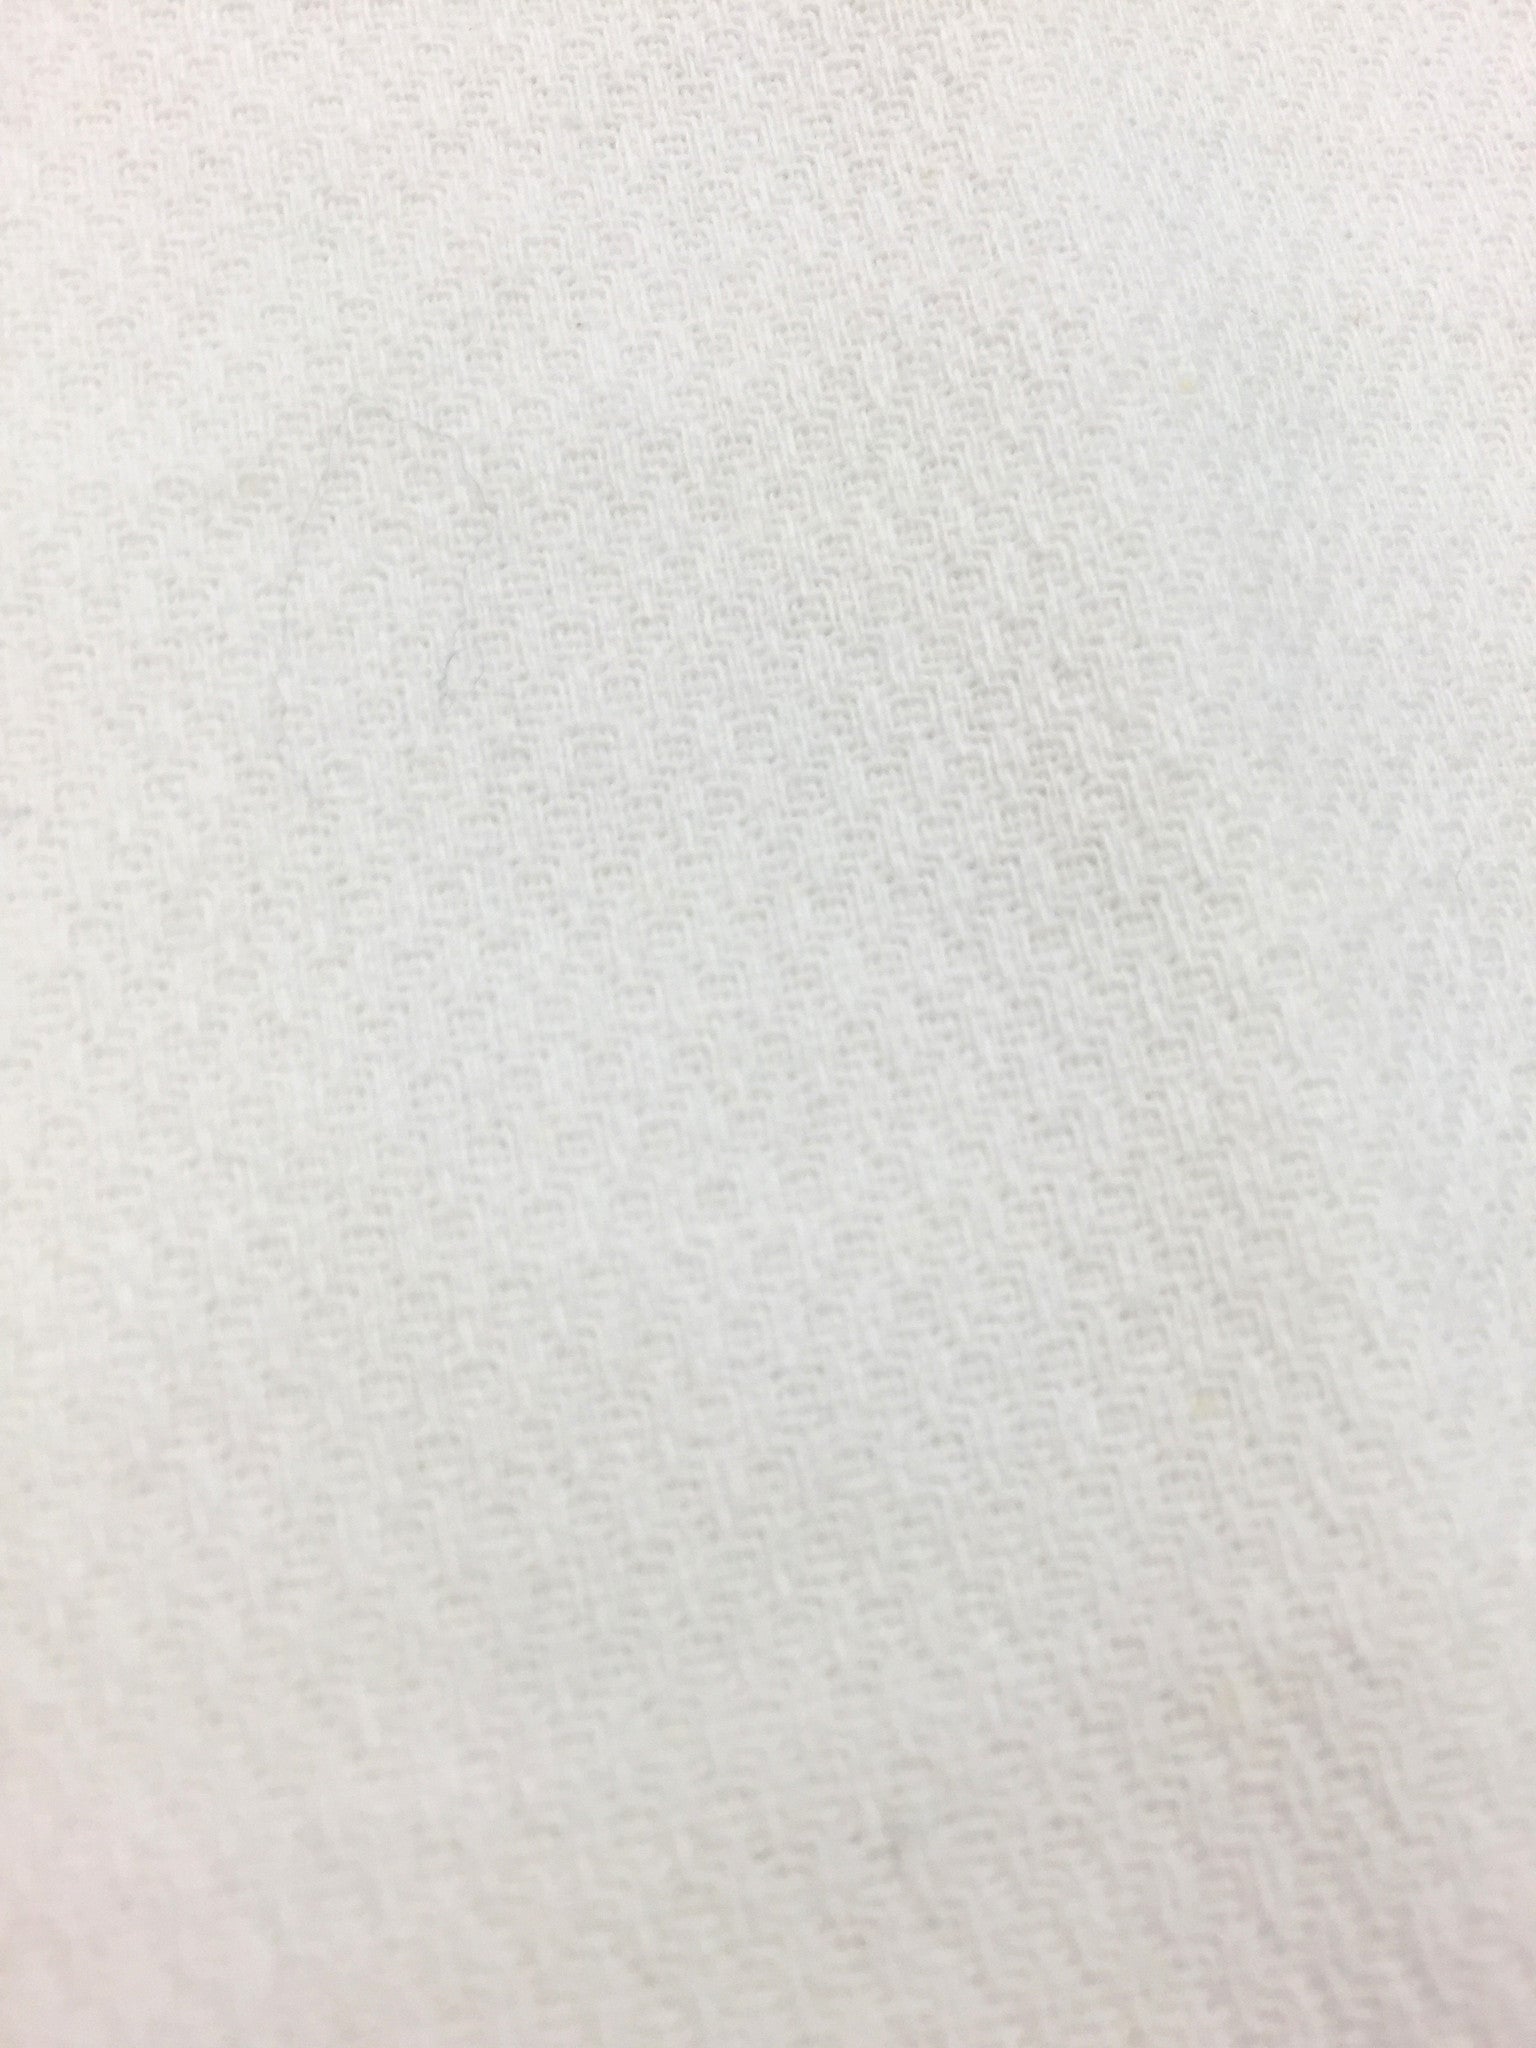 Cotton Diaper Cloth 100% Cotton Width 36'' Weight 170gsm